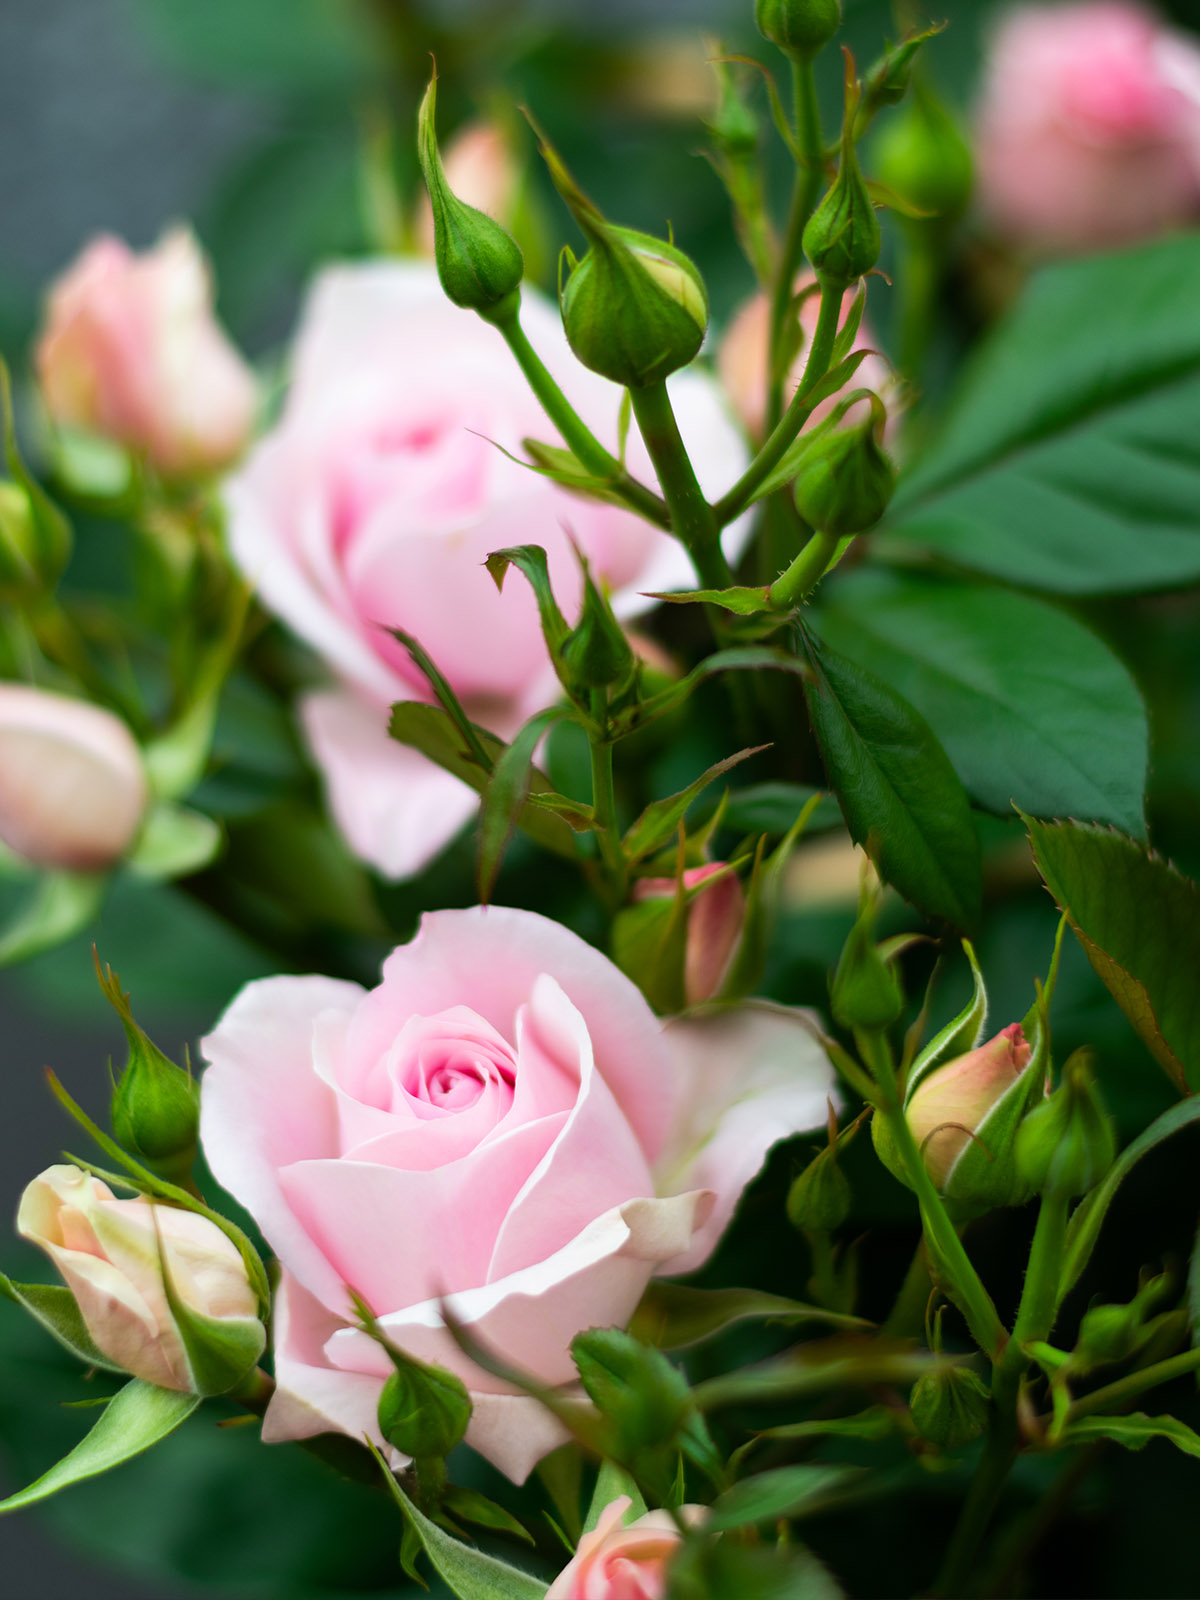 Garden rose Classic Select by Select Breeding - on Thursd